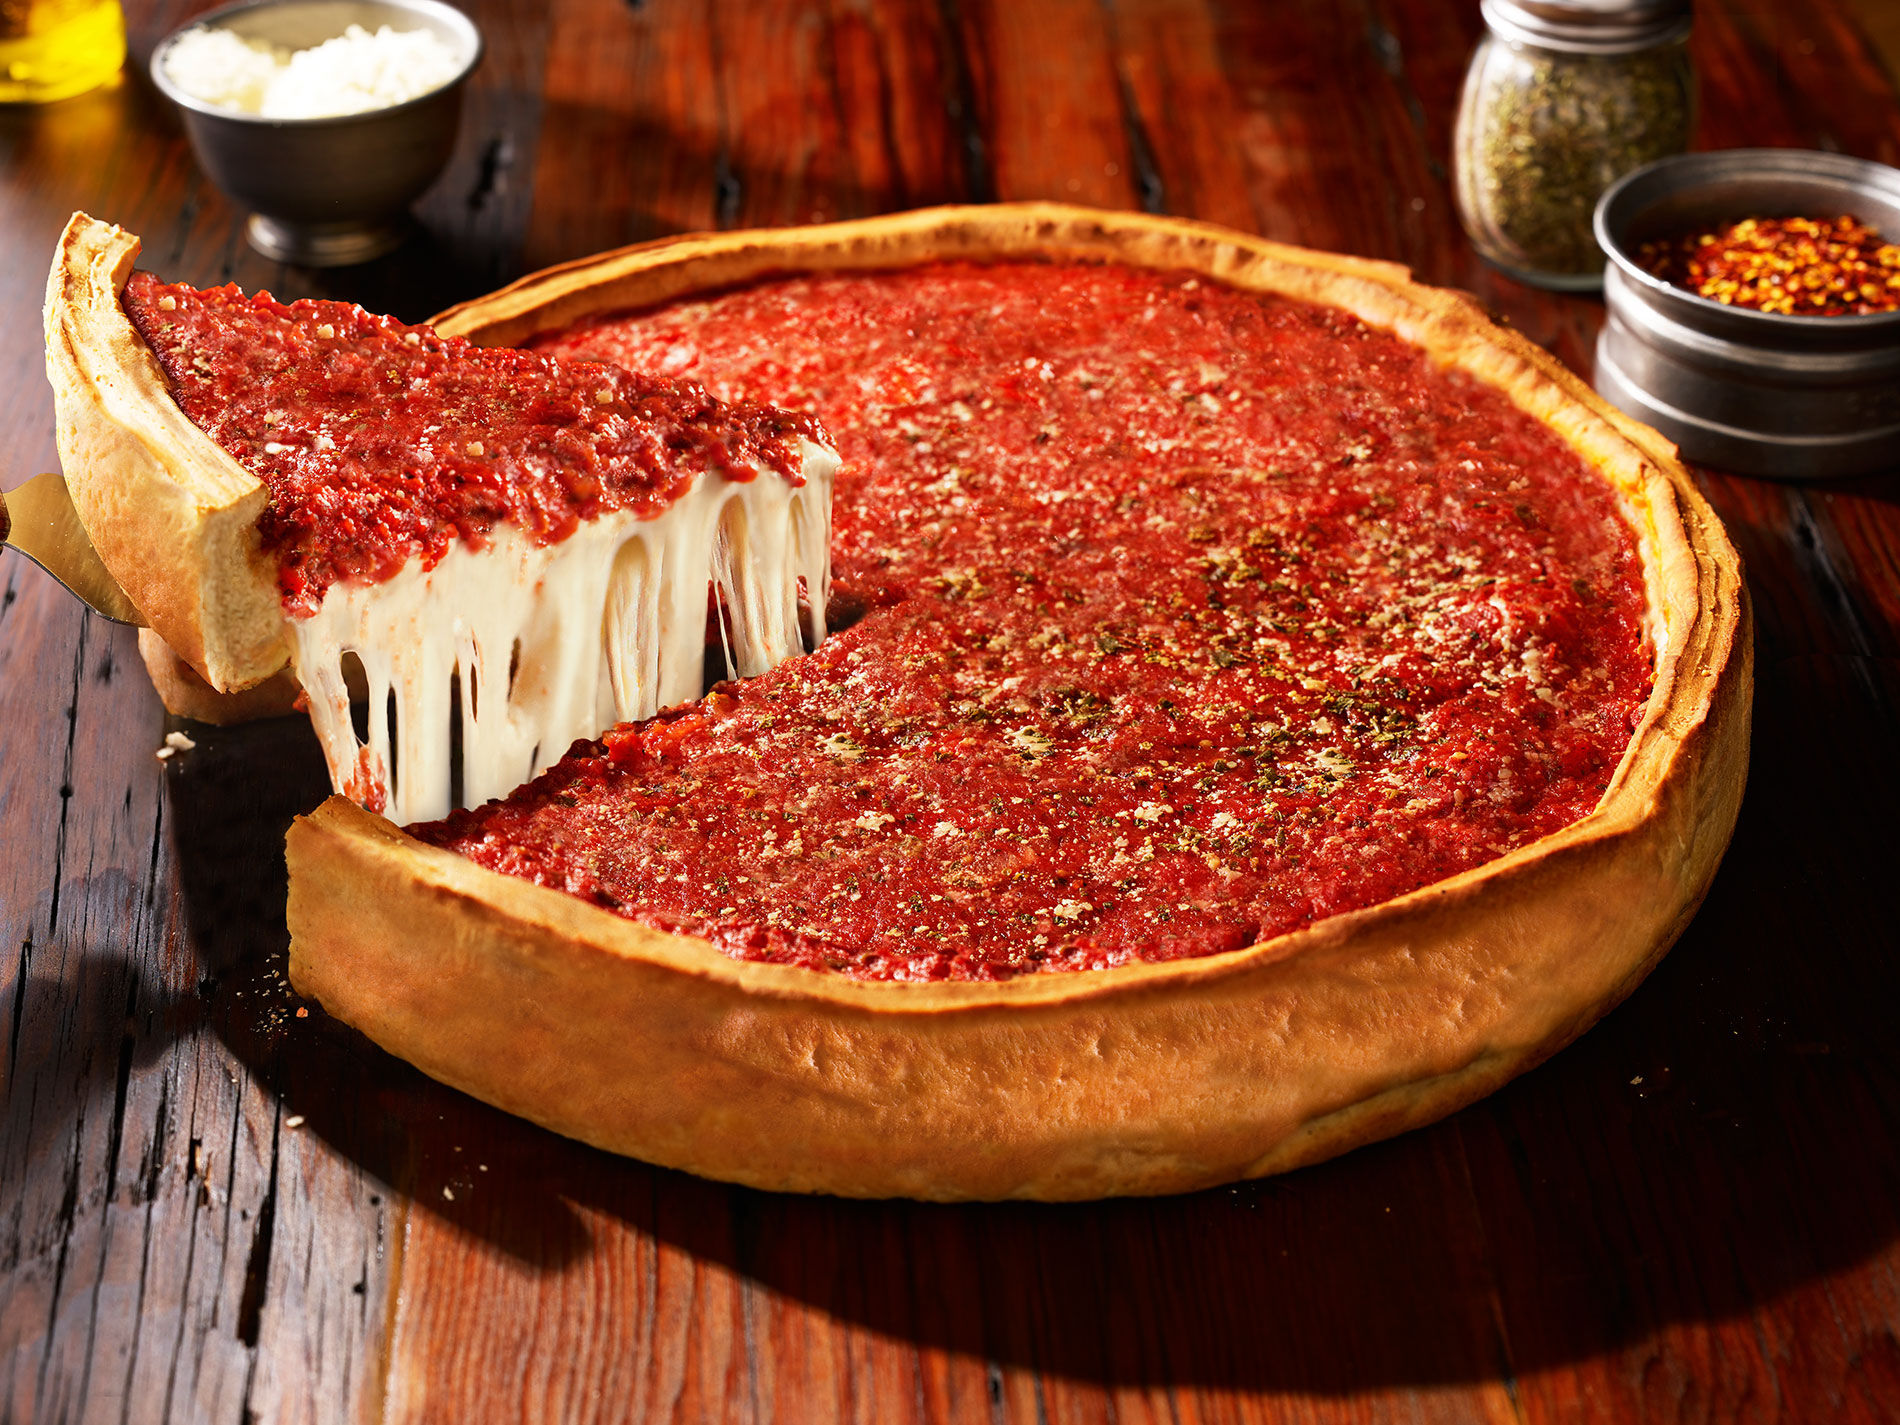 Chicago deep-dish pizza